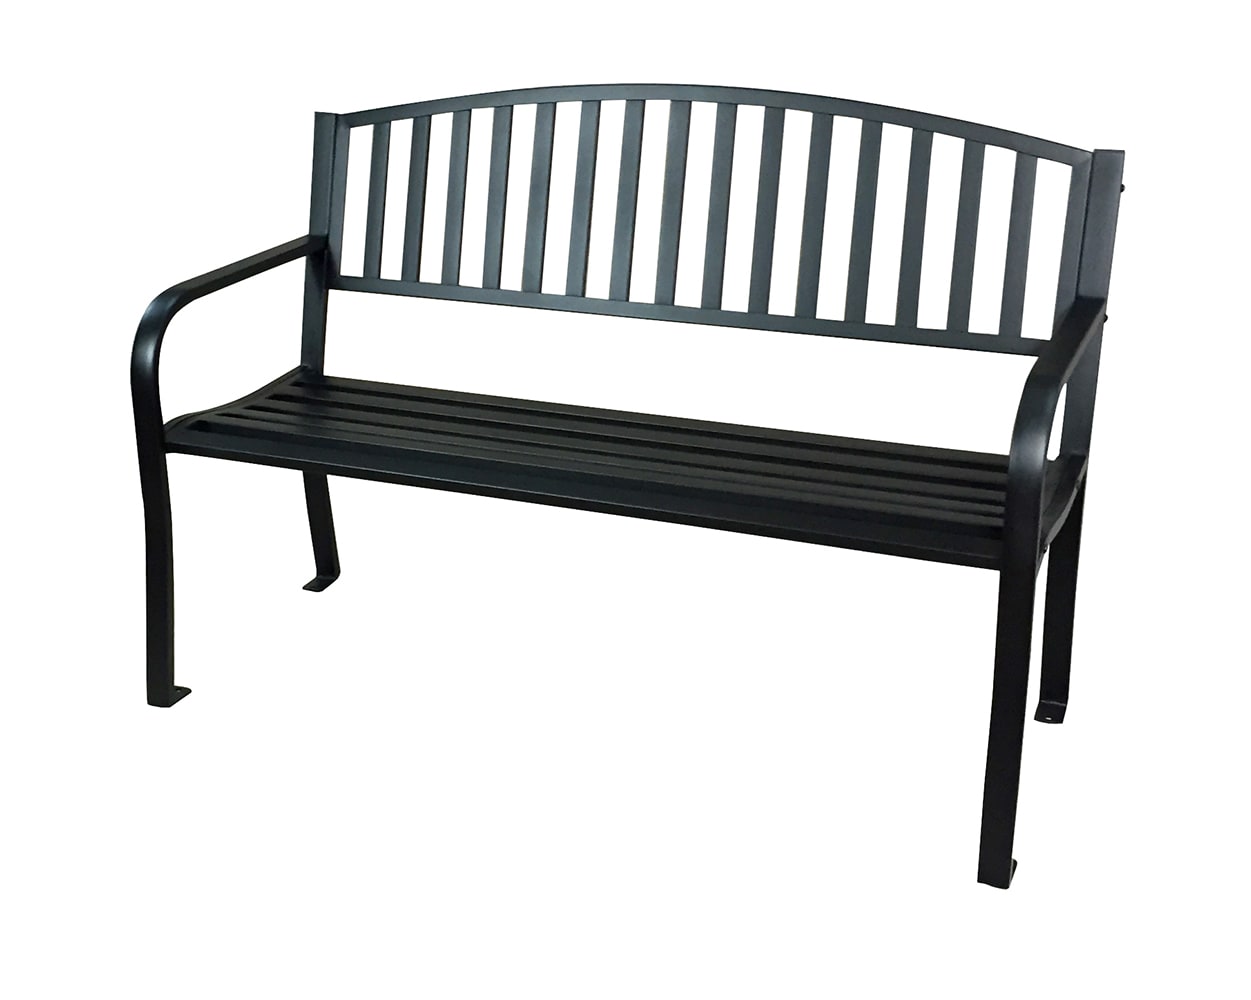 Durable steel metal frame material Steel Bench Black Color Outdoor 